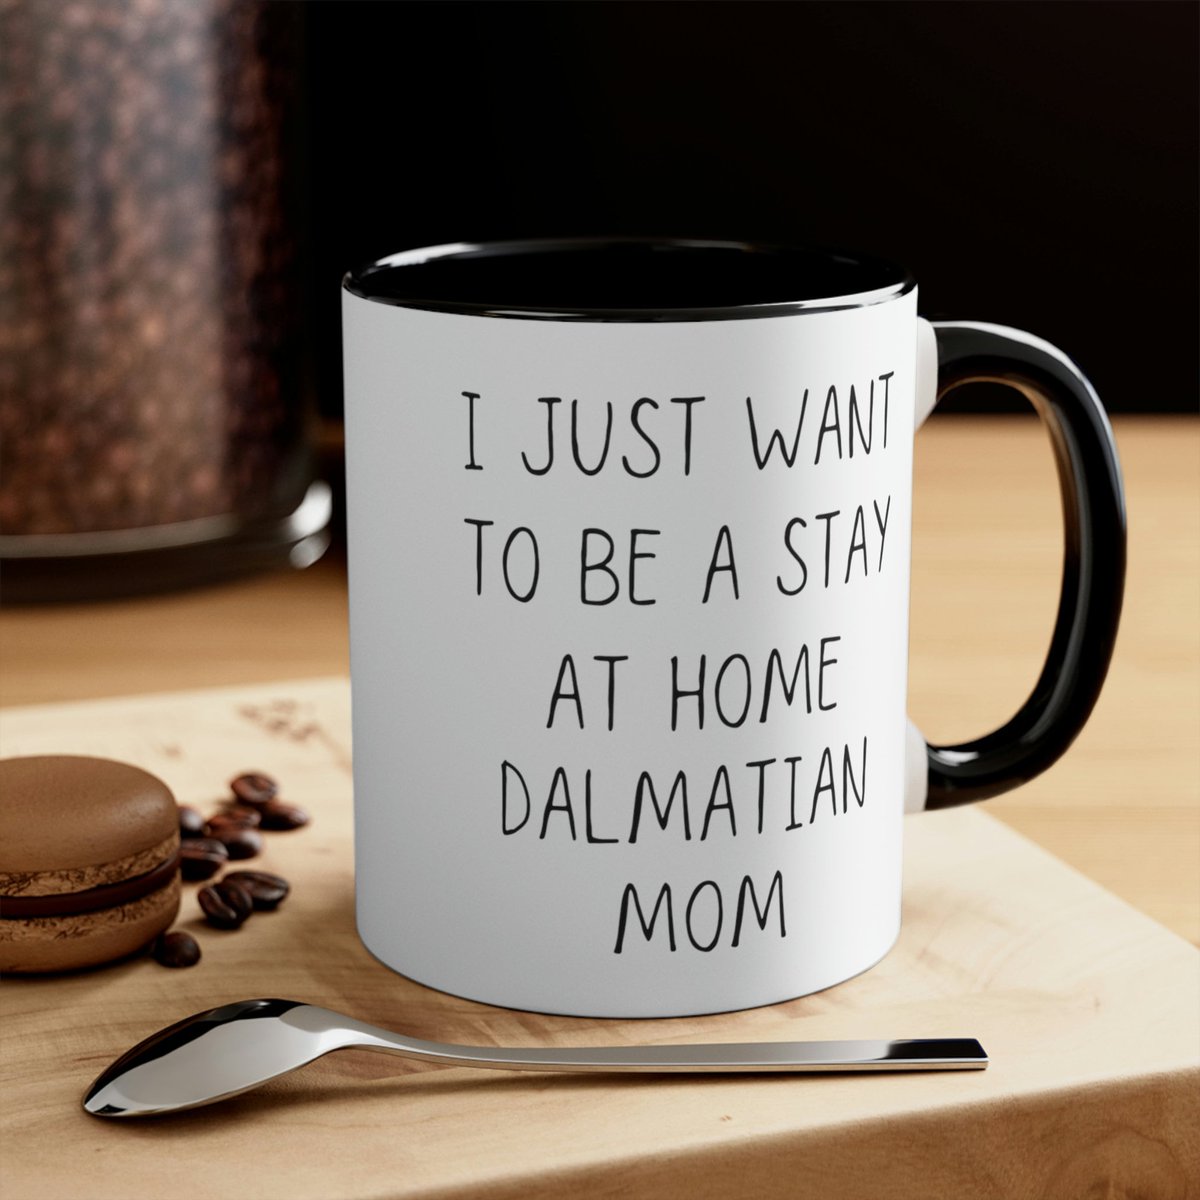 Funny Dalmatian Mom Gift Mug #dalmatian #dalmatiandog #dalmatiangift #dalmatianmotherday #dalmatianmom #dalmatianmom #dalmatiangift #dalmatianmug CLICK HERE TO BUY NOW: etsy.me/40lgDZ3